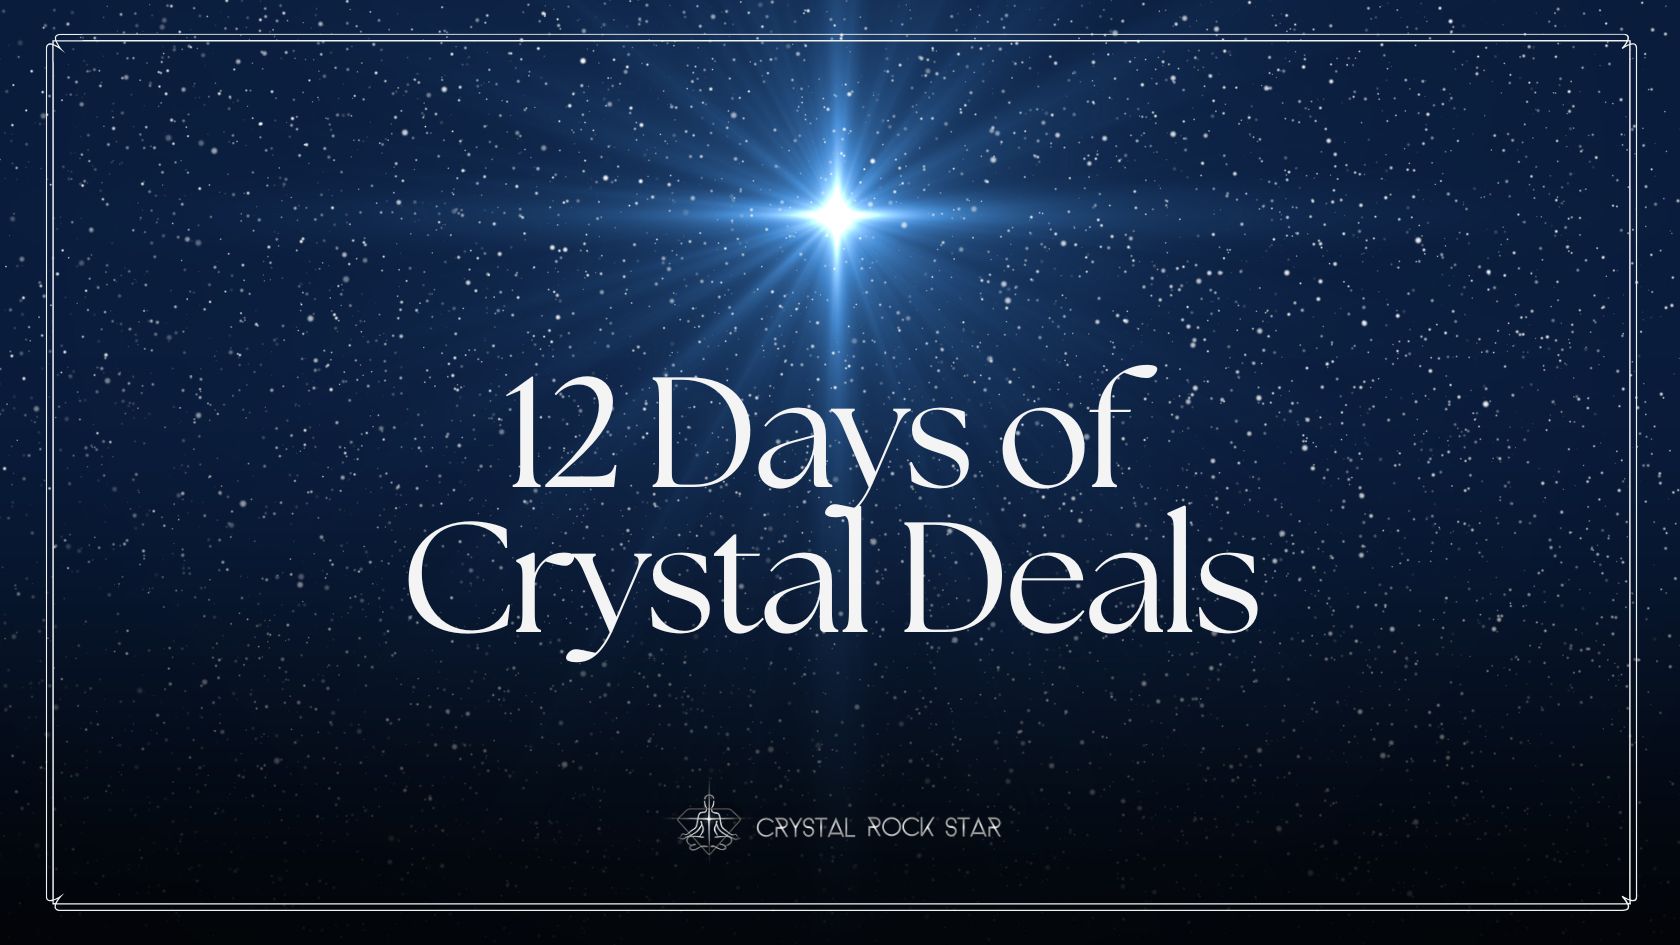 12 Days of Crystal Deals by CrystalRockStar.com